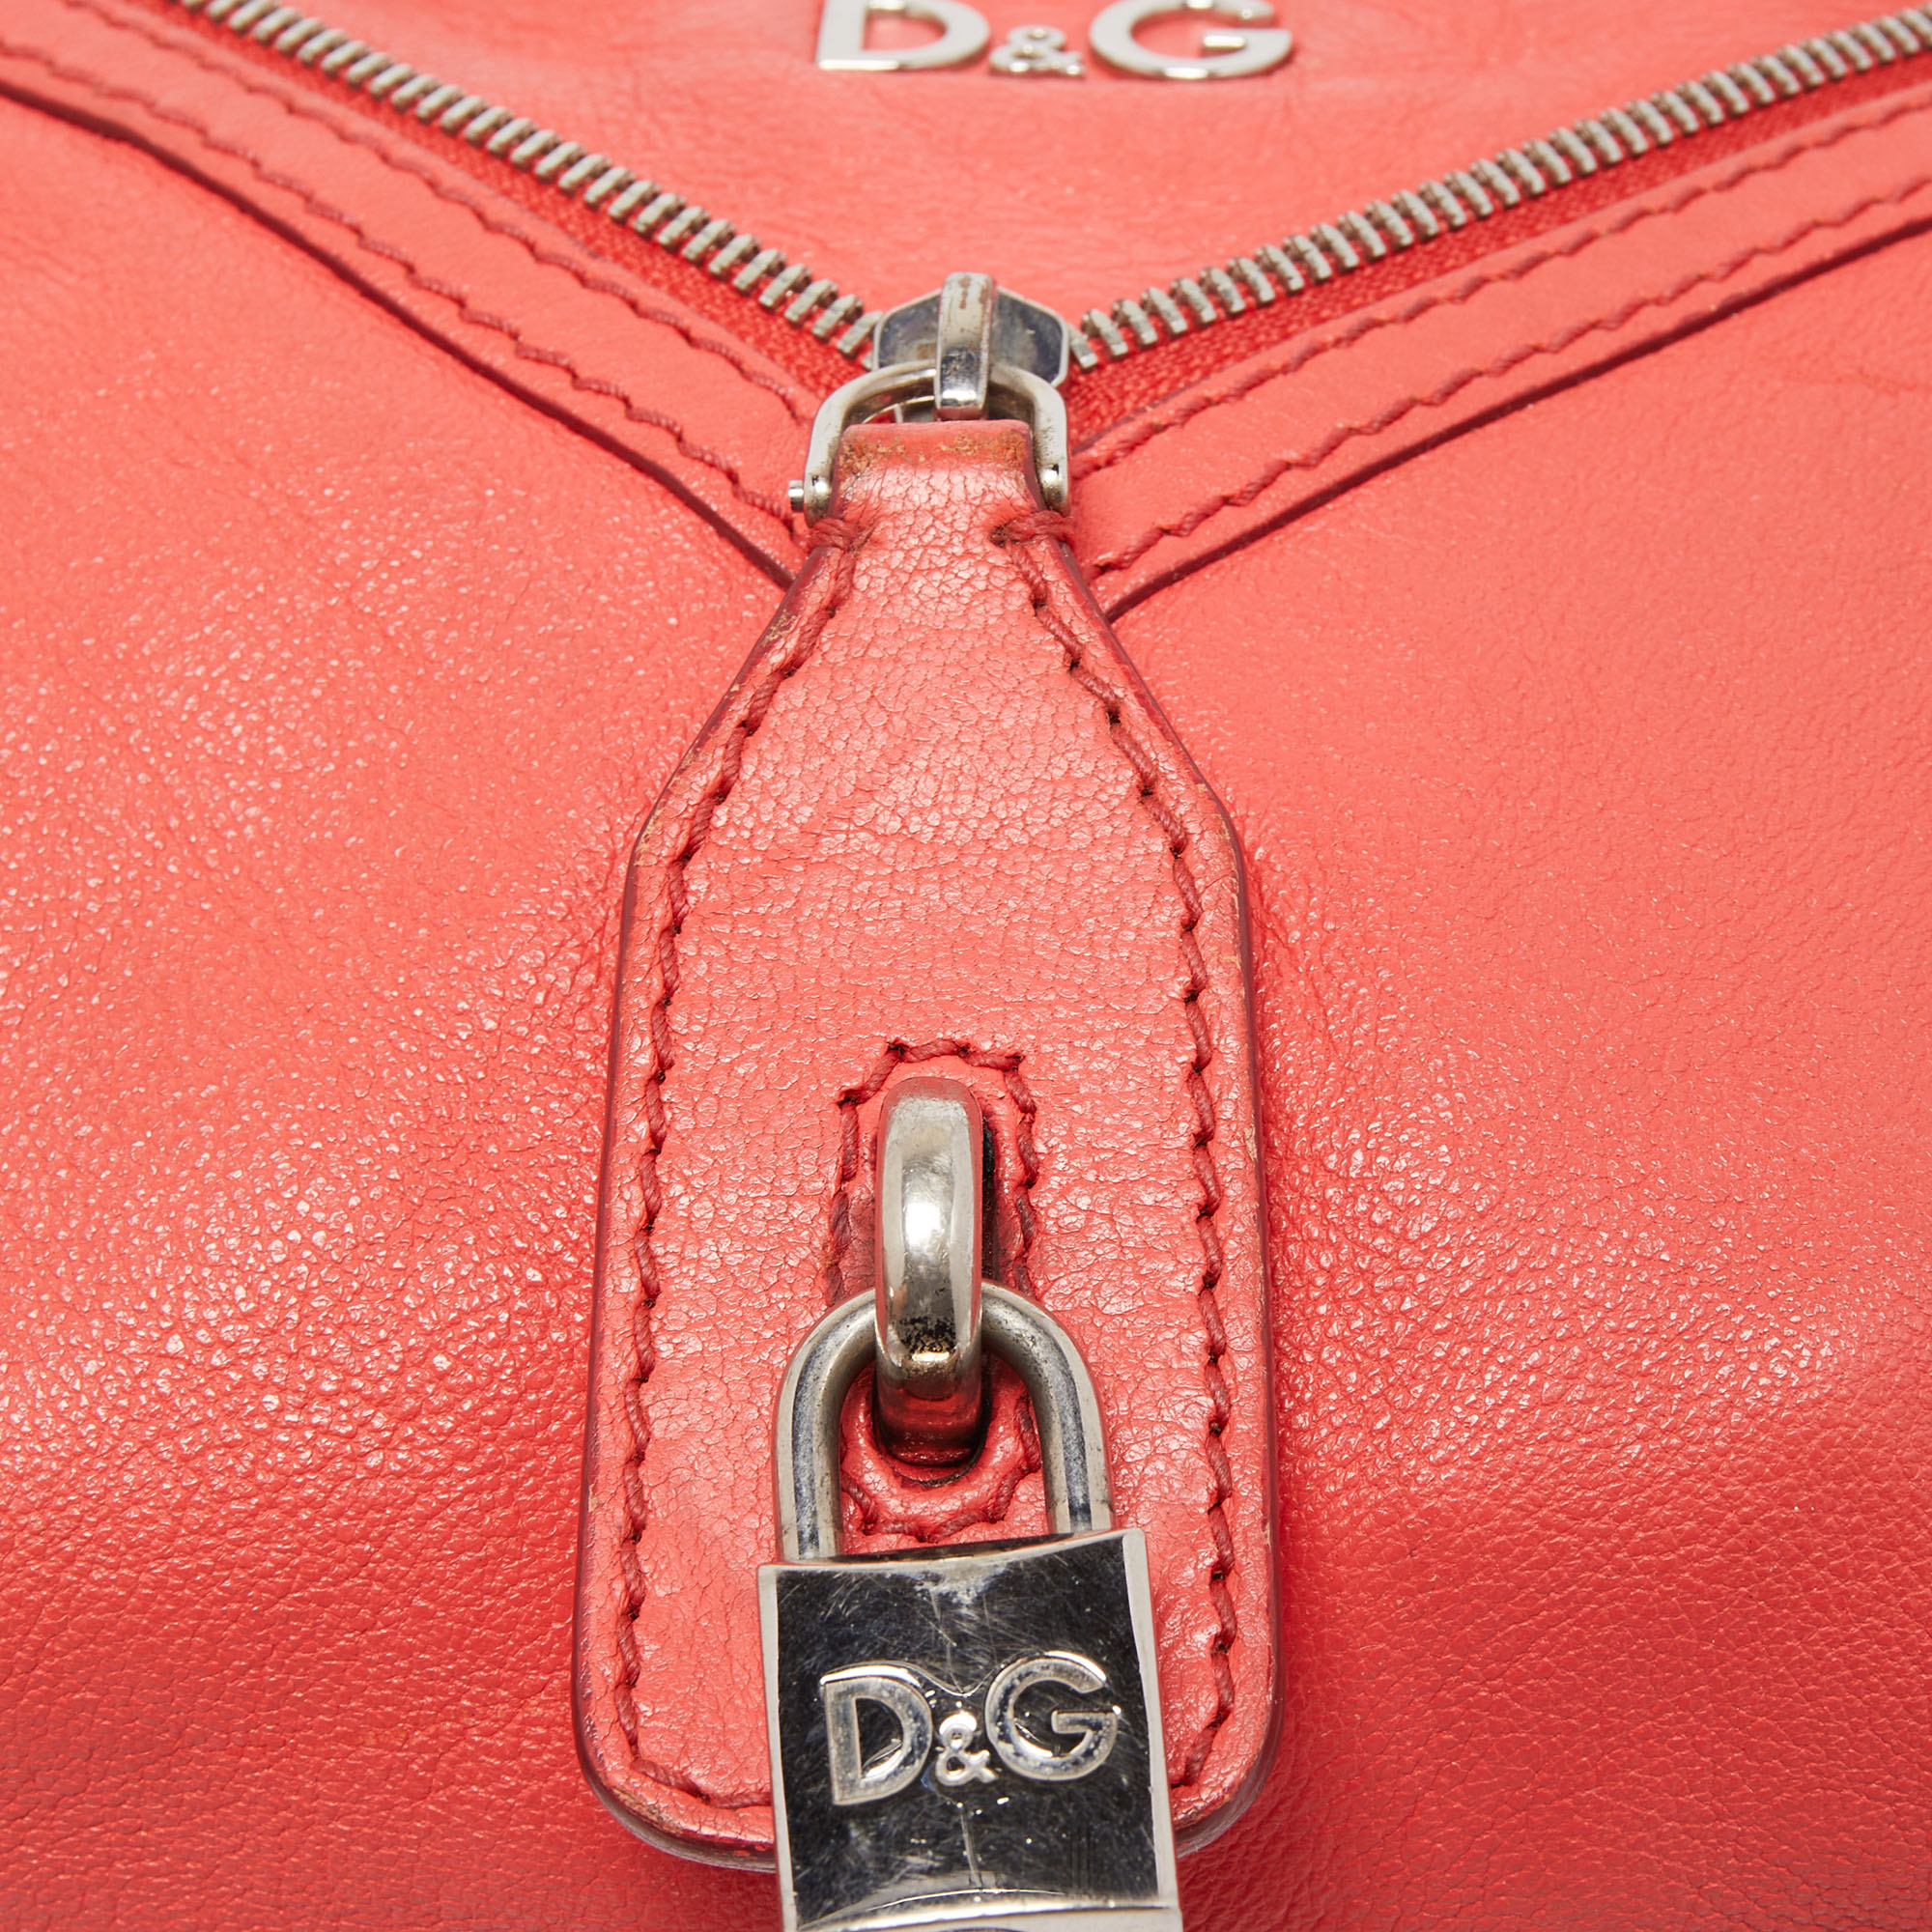 D&G Coral Orange Leather Vilma Crossbody Bag